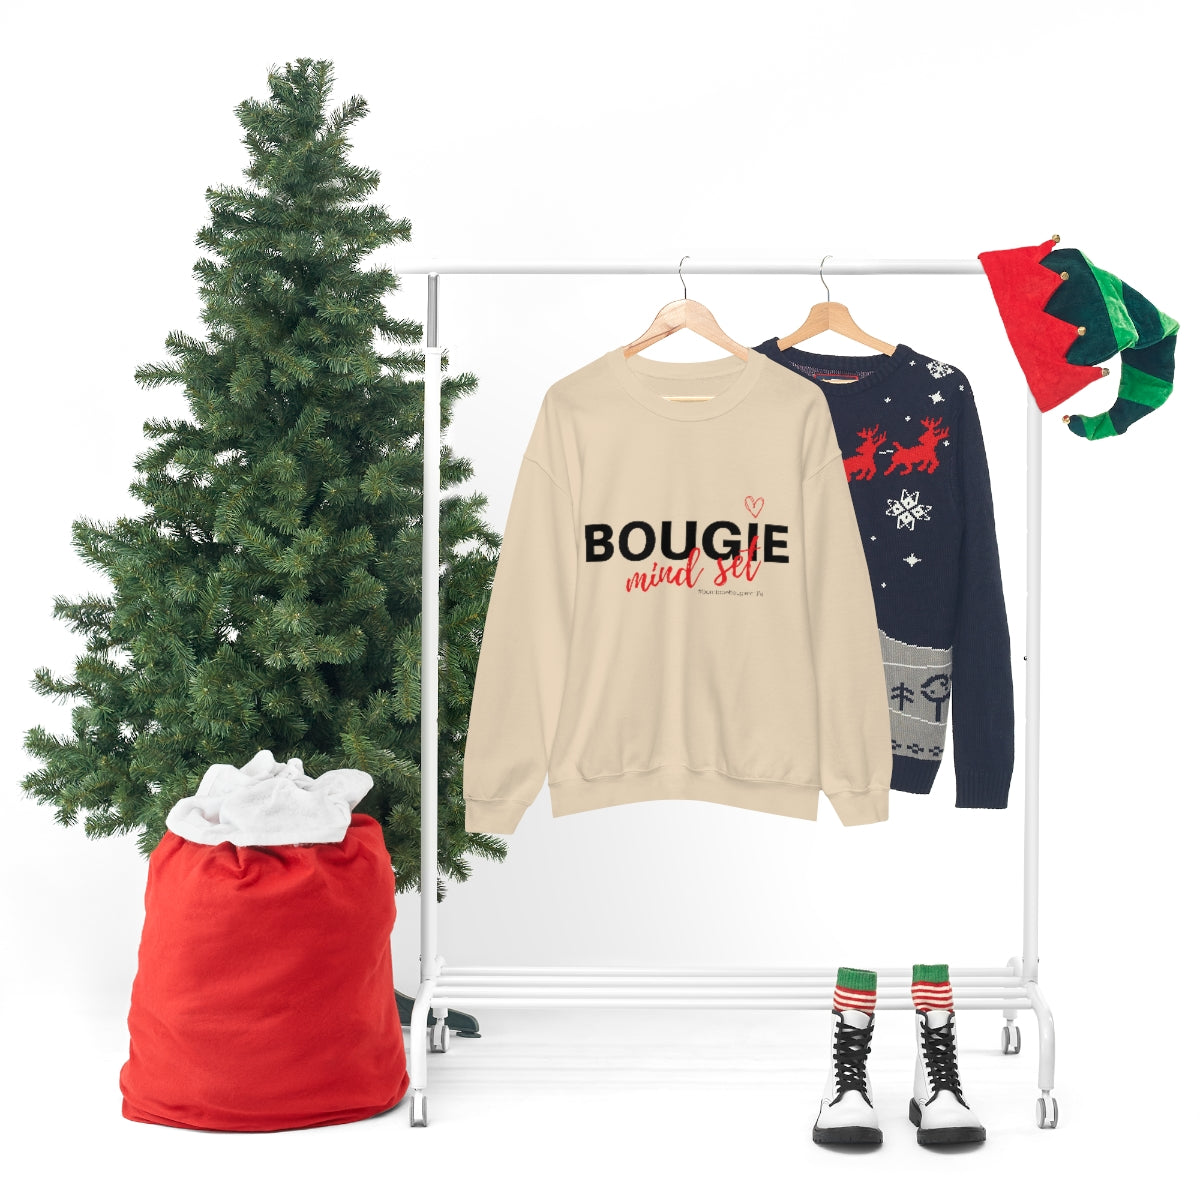 Bougie Mind Set Sweatshirt